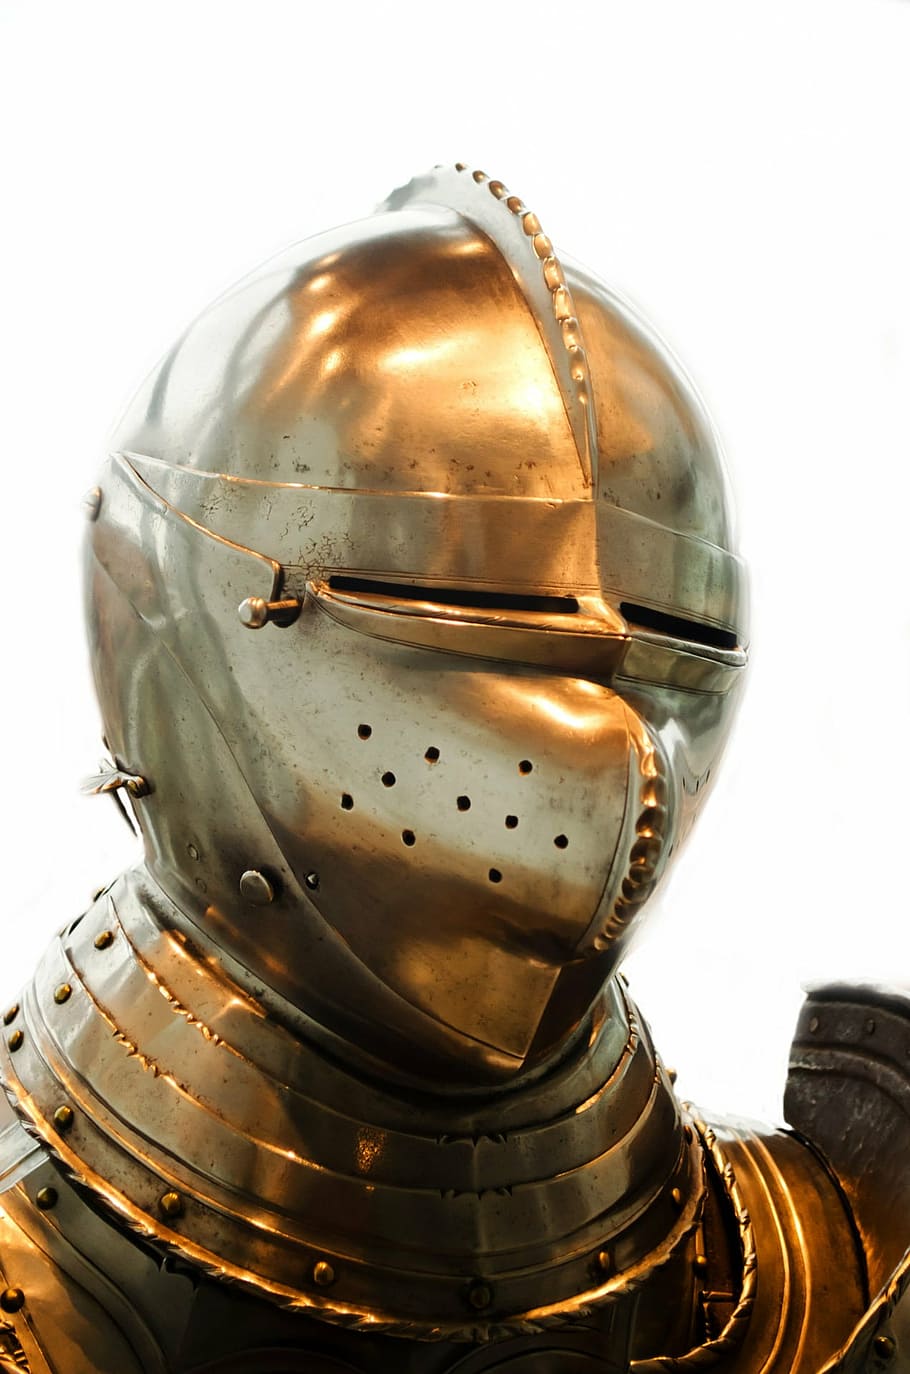 medieval helmet decor, helmet, armor, knight, history, steel, protection, old, museum, close-up